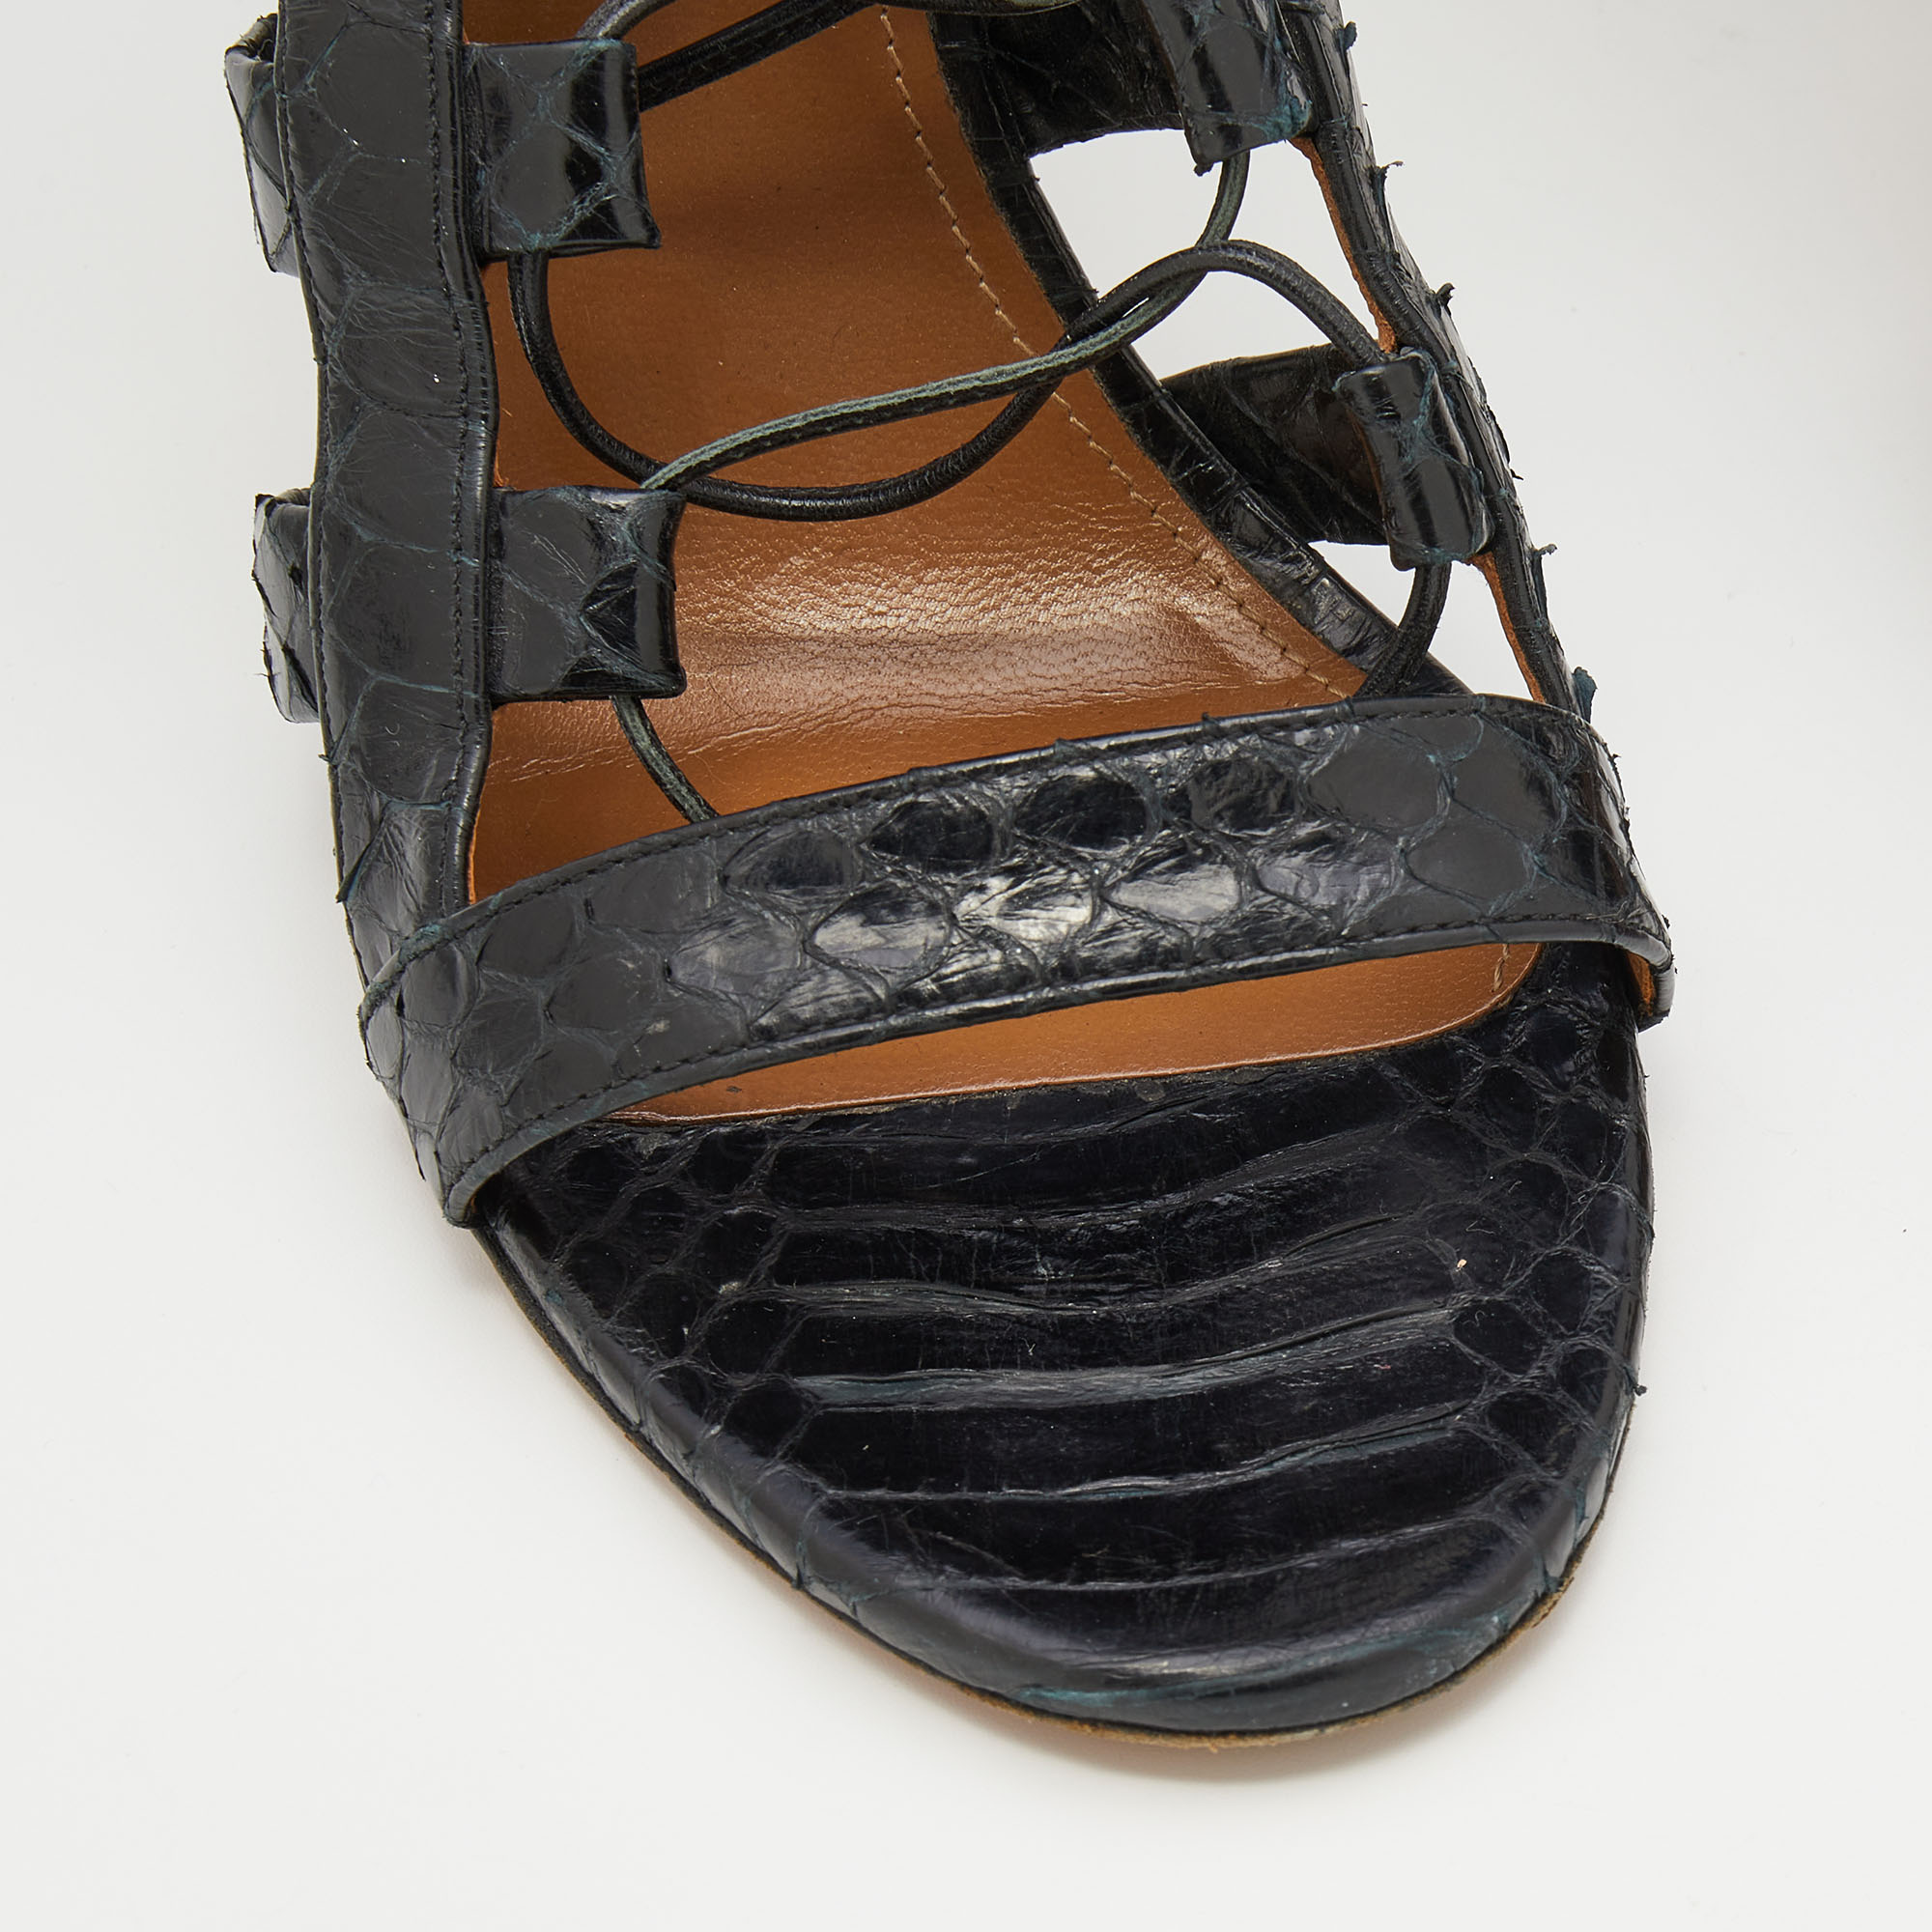 Aquazzura Black Watersnake Leather Amazon Lace Up Open Toe Sandals Size 36